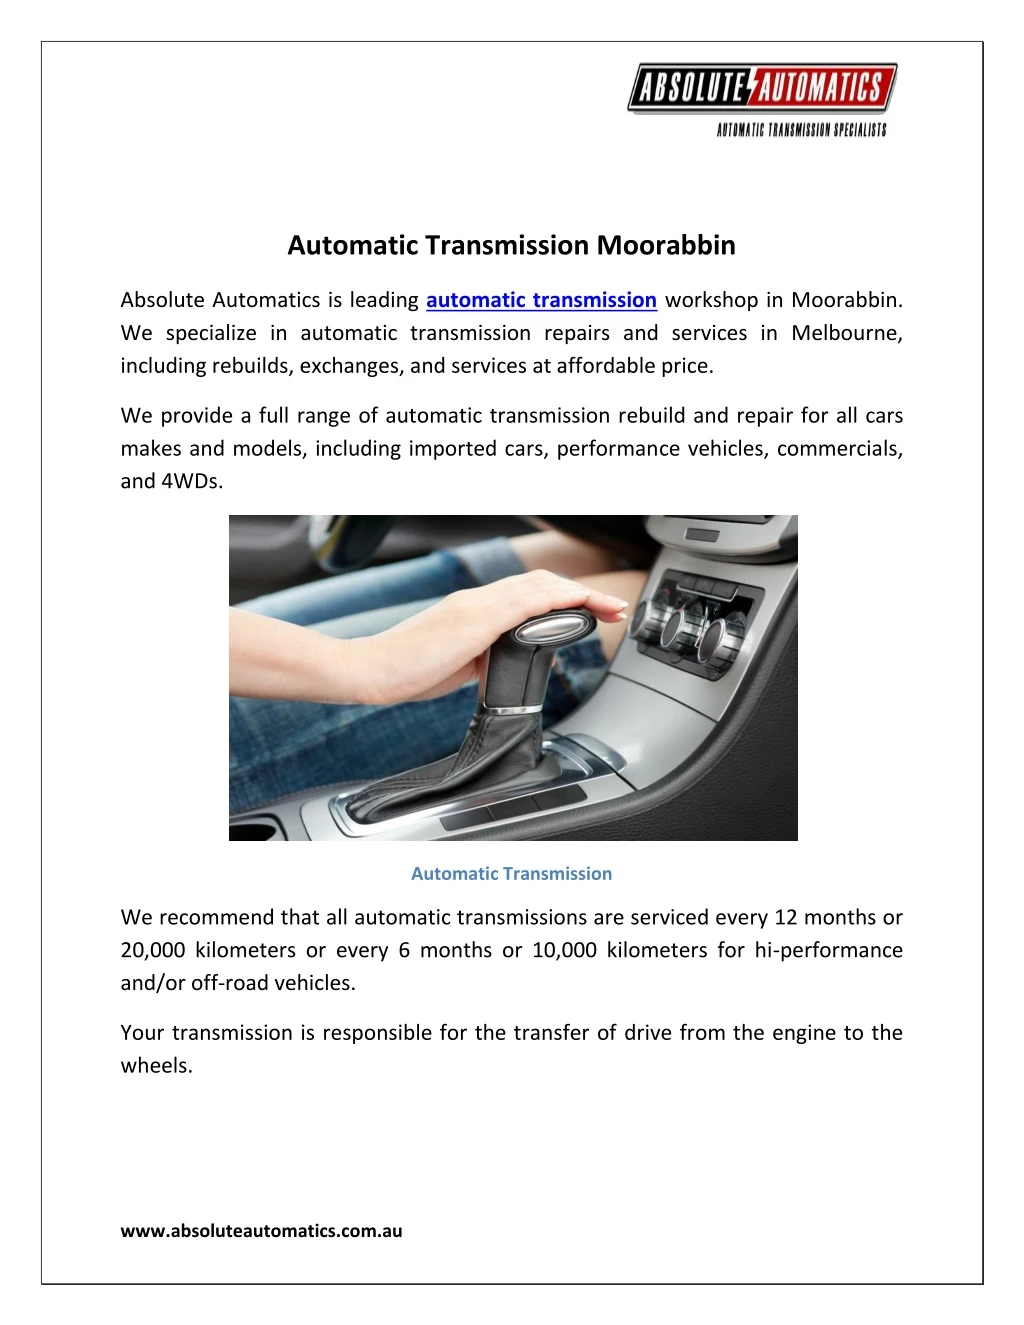 automatic transmission moorabbin